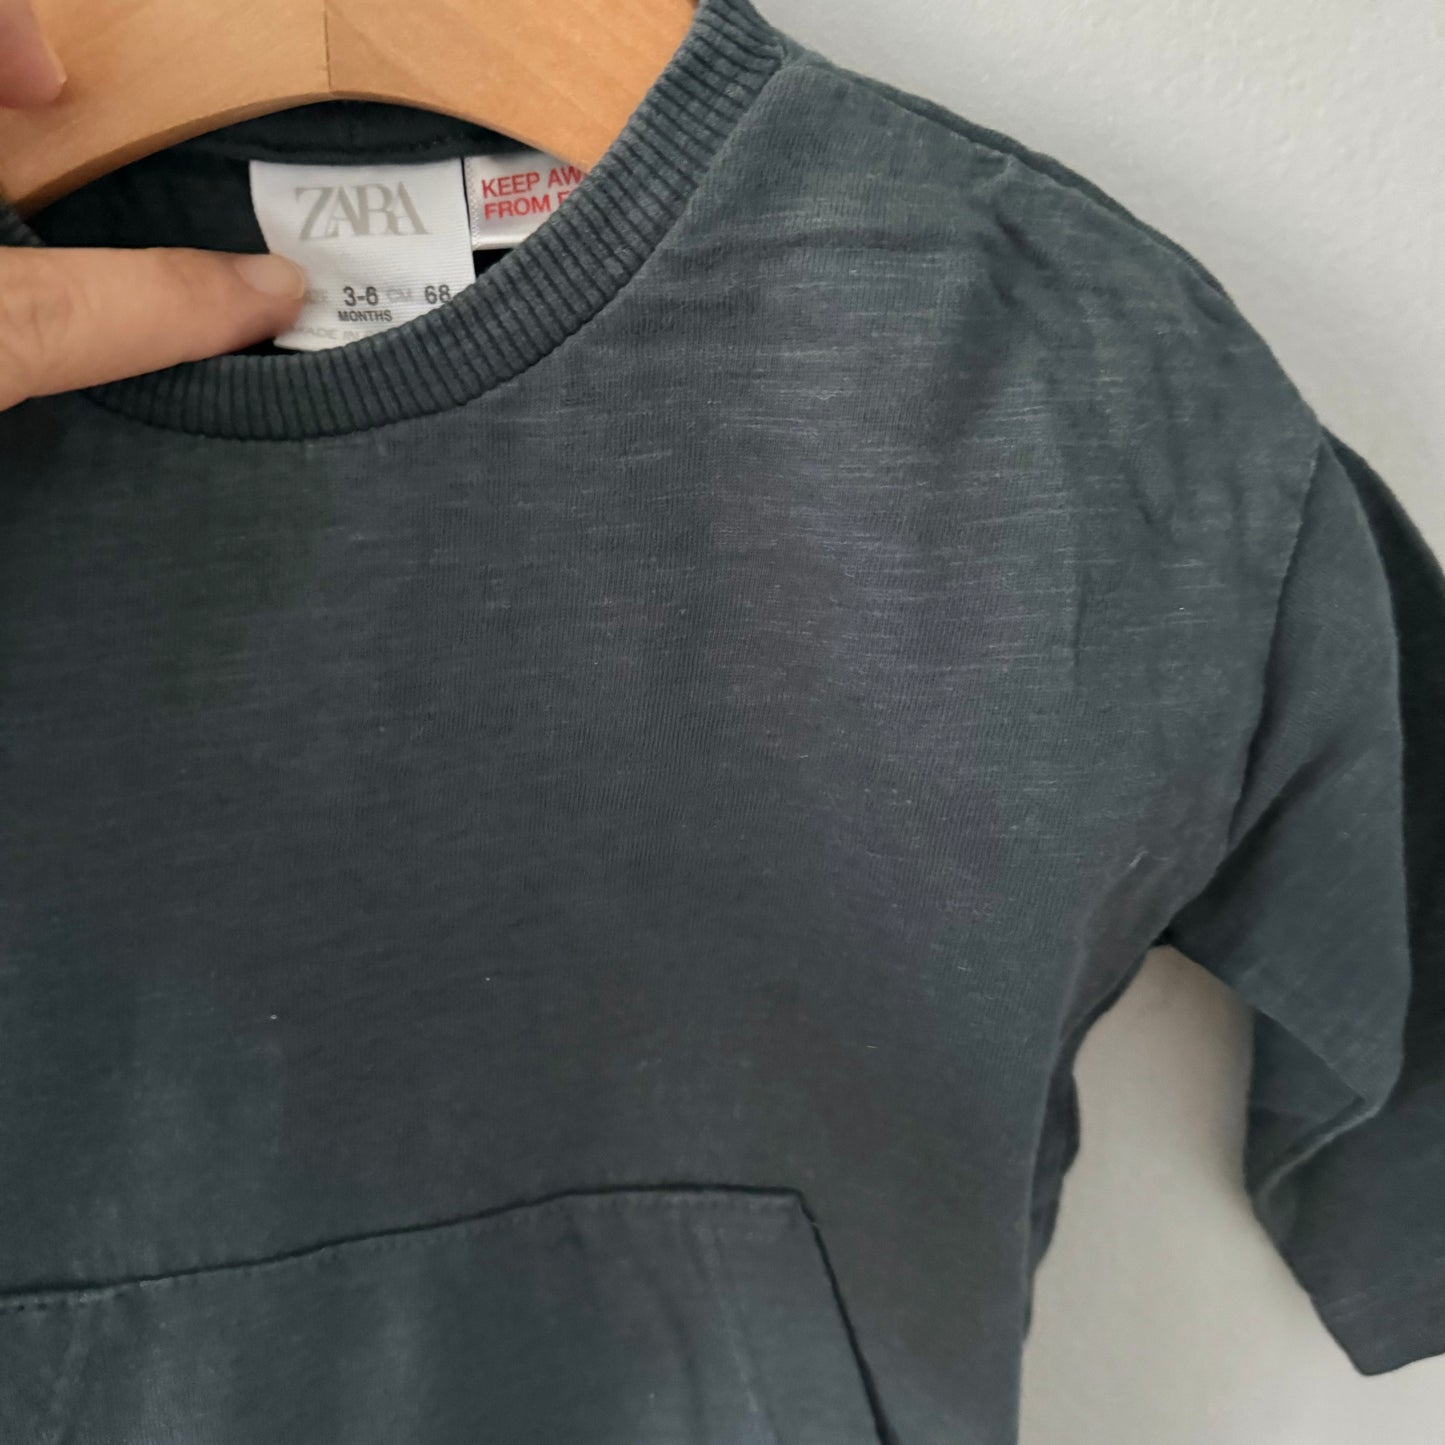 Zara / Dark green long sleeve T-shirt with front pocket / 3-6M